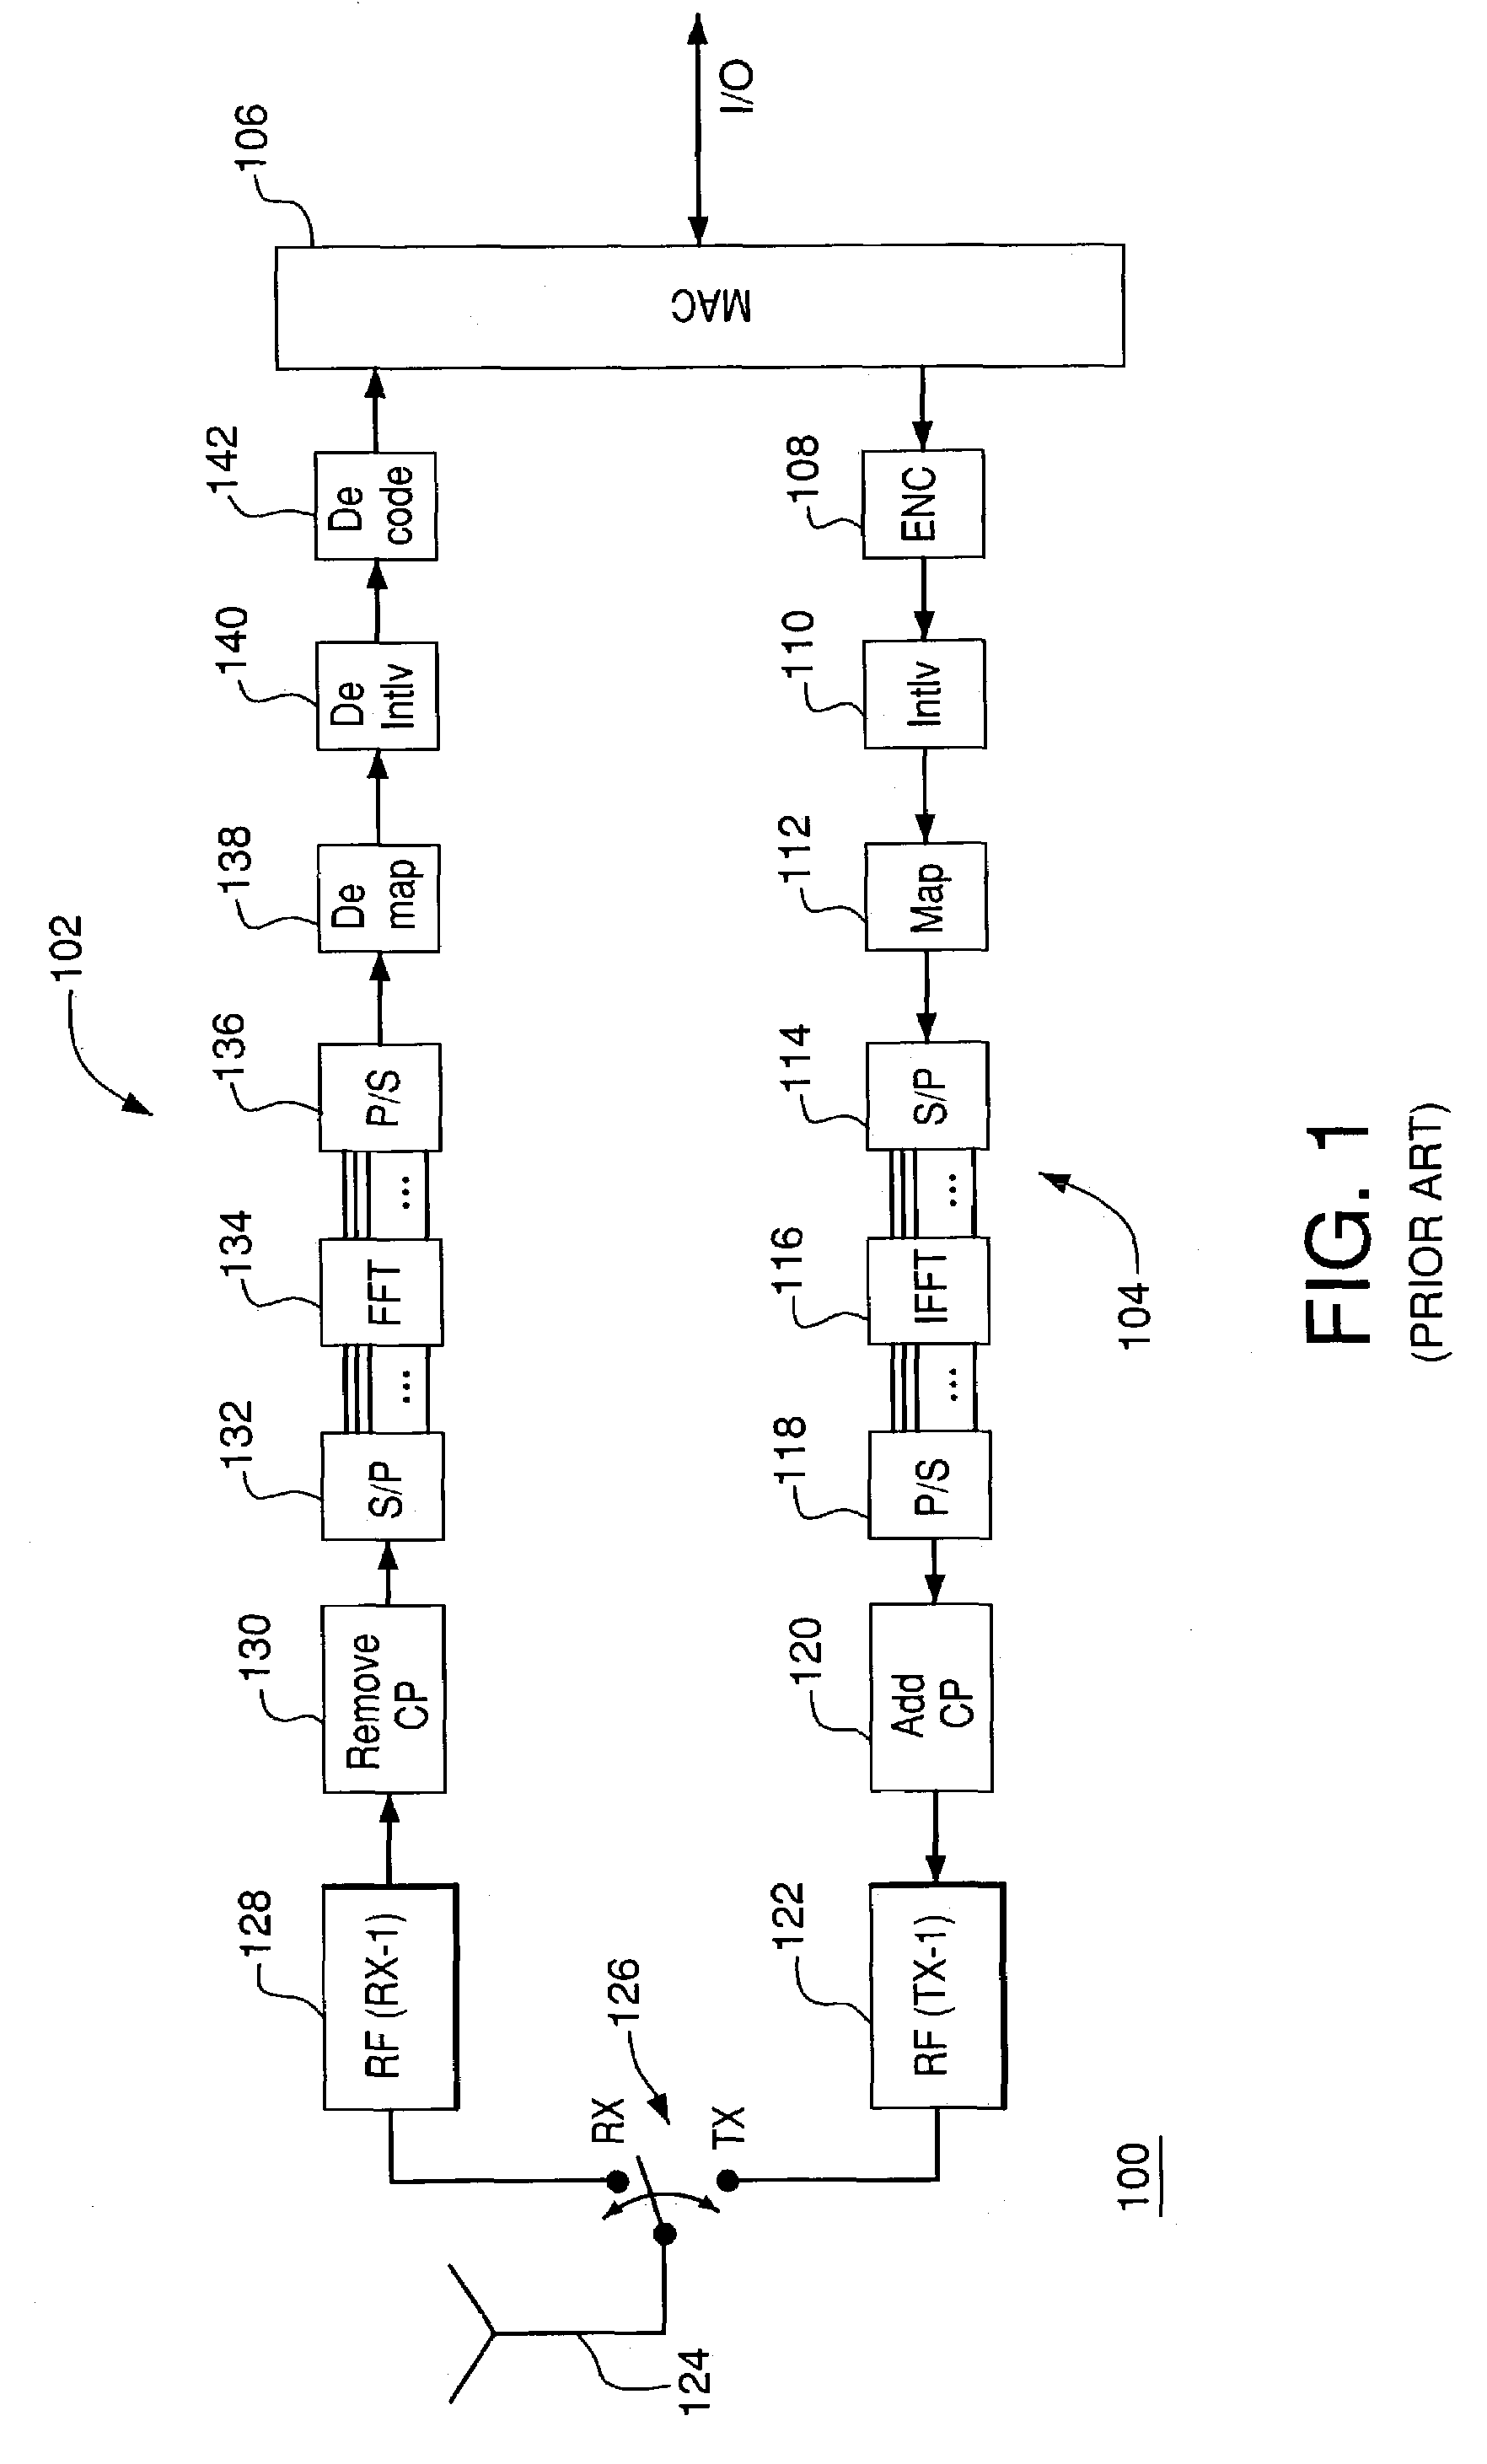 Partitioning scheme for an OFDM transceiver